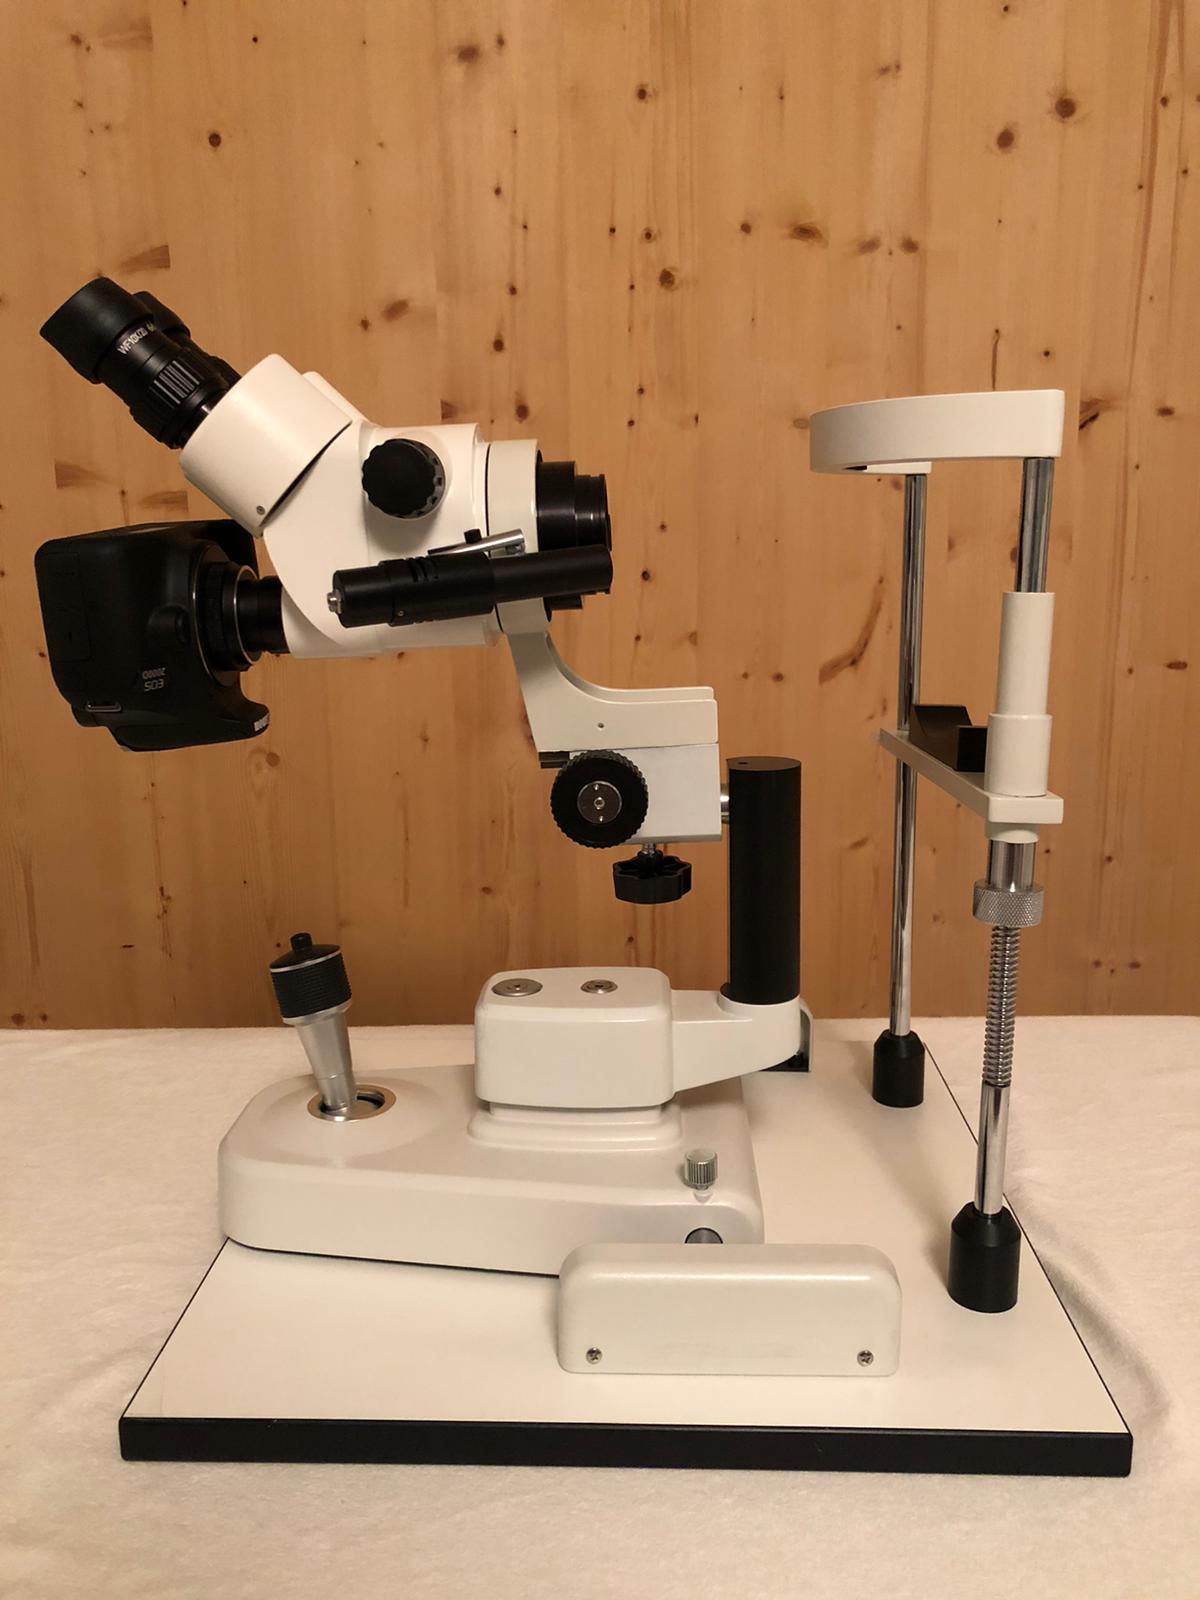 Irismikroskop ink. Spiegelreflexcamera, Bj. 2019